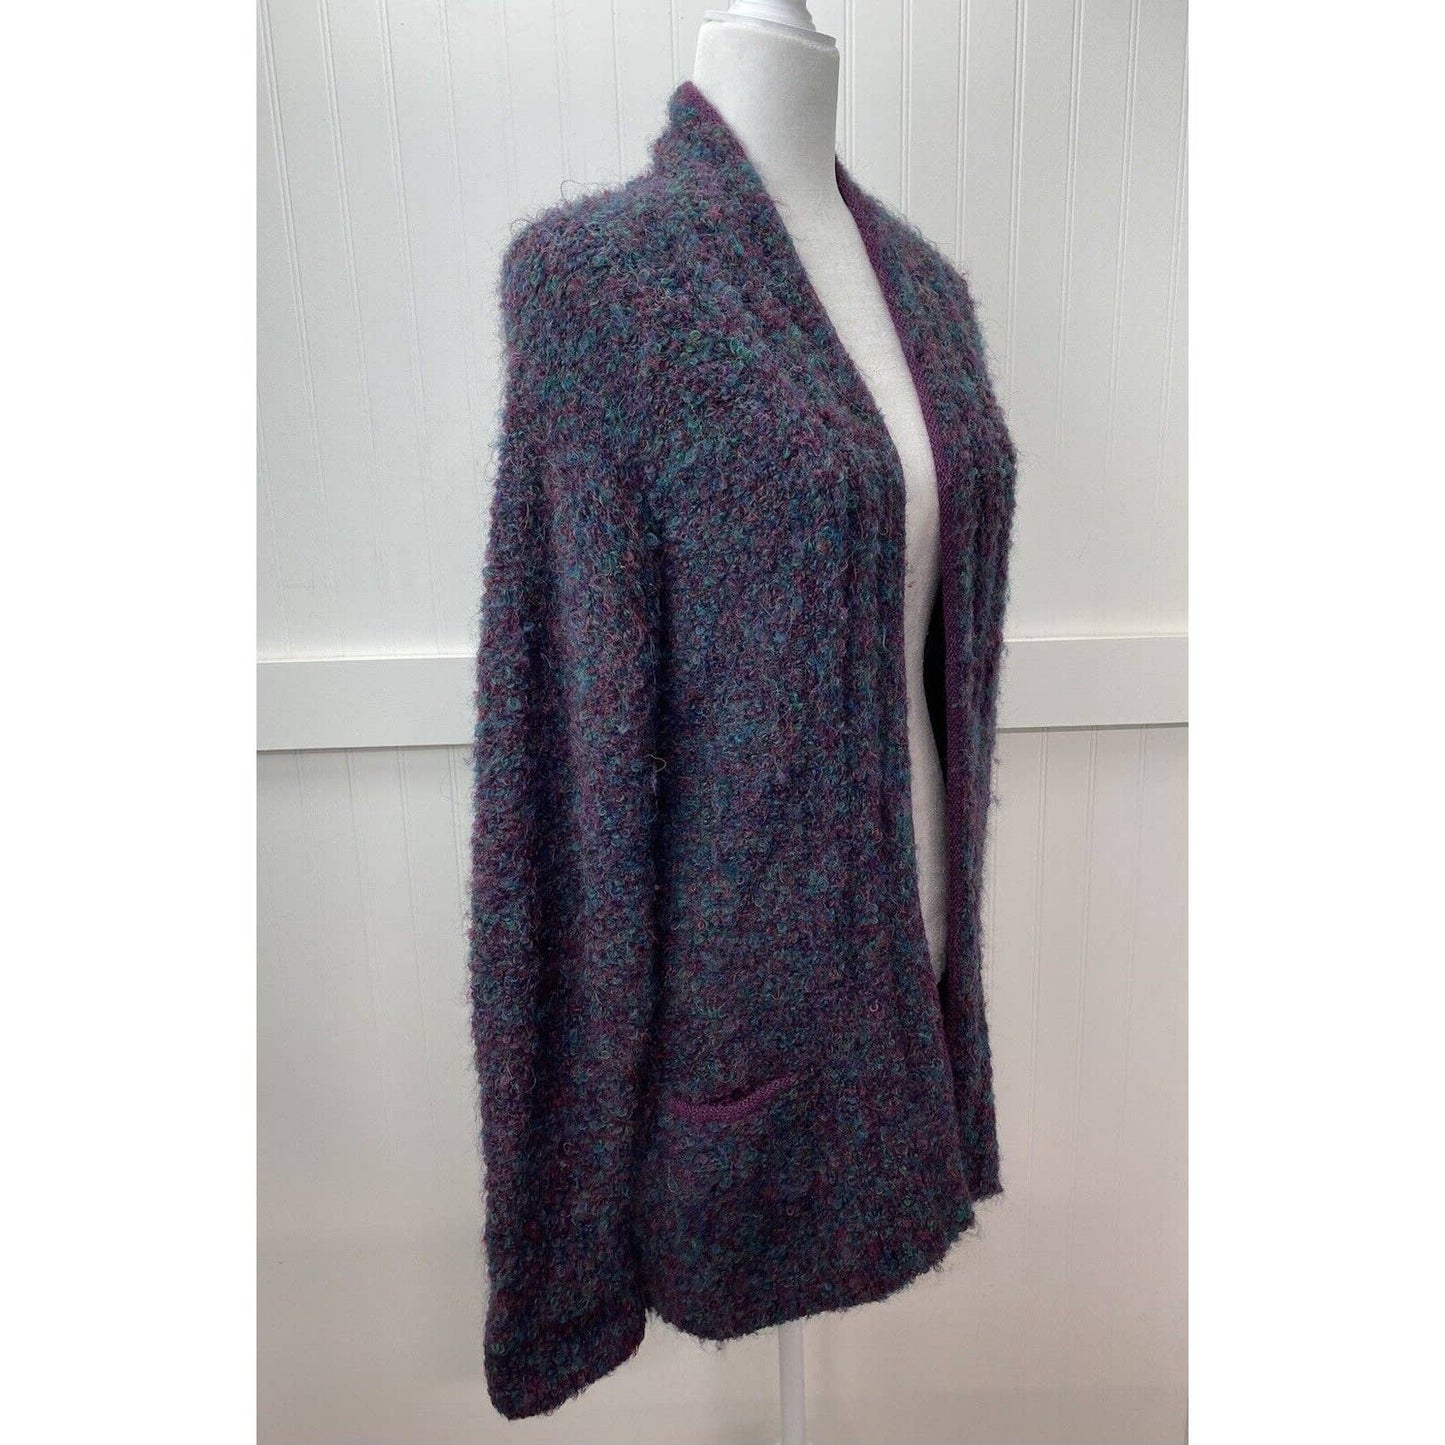 Tey-Art Alpaca Wool Blend Cardigan Sz Medium Hand-Made Sweater Peru Fuzzy Soft